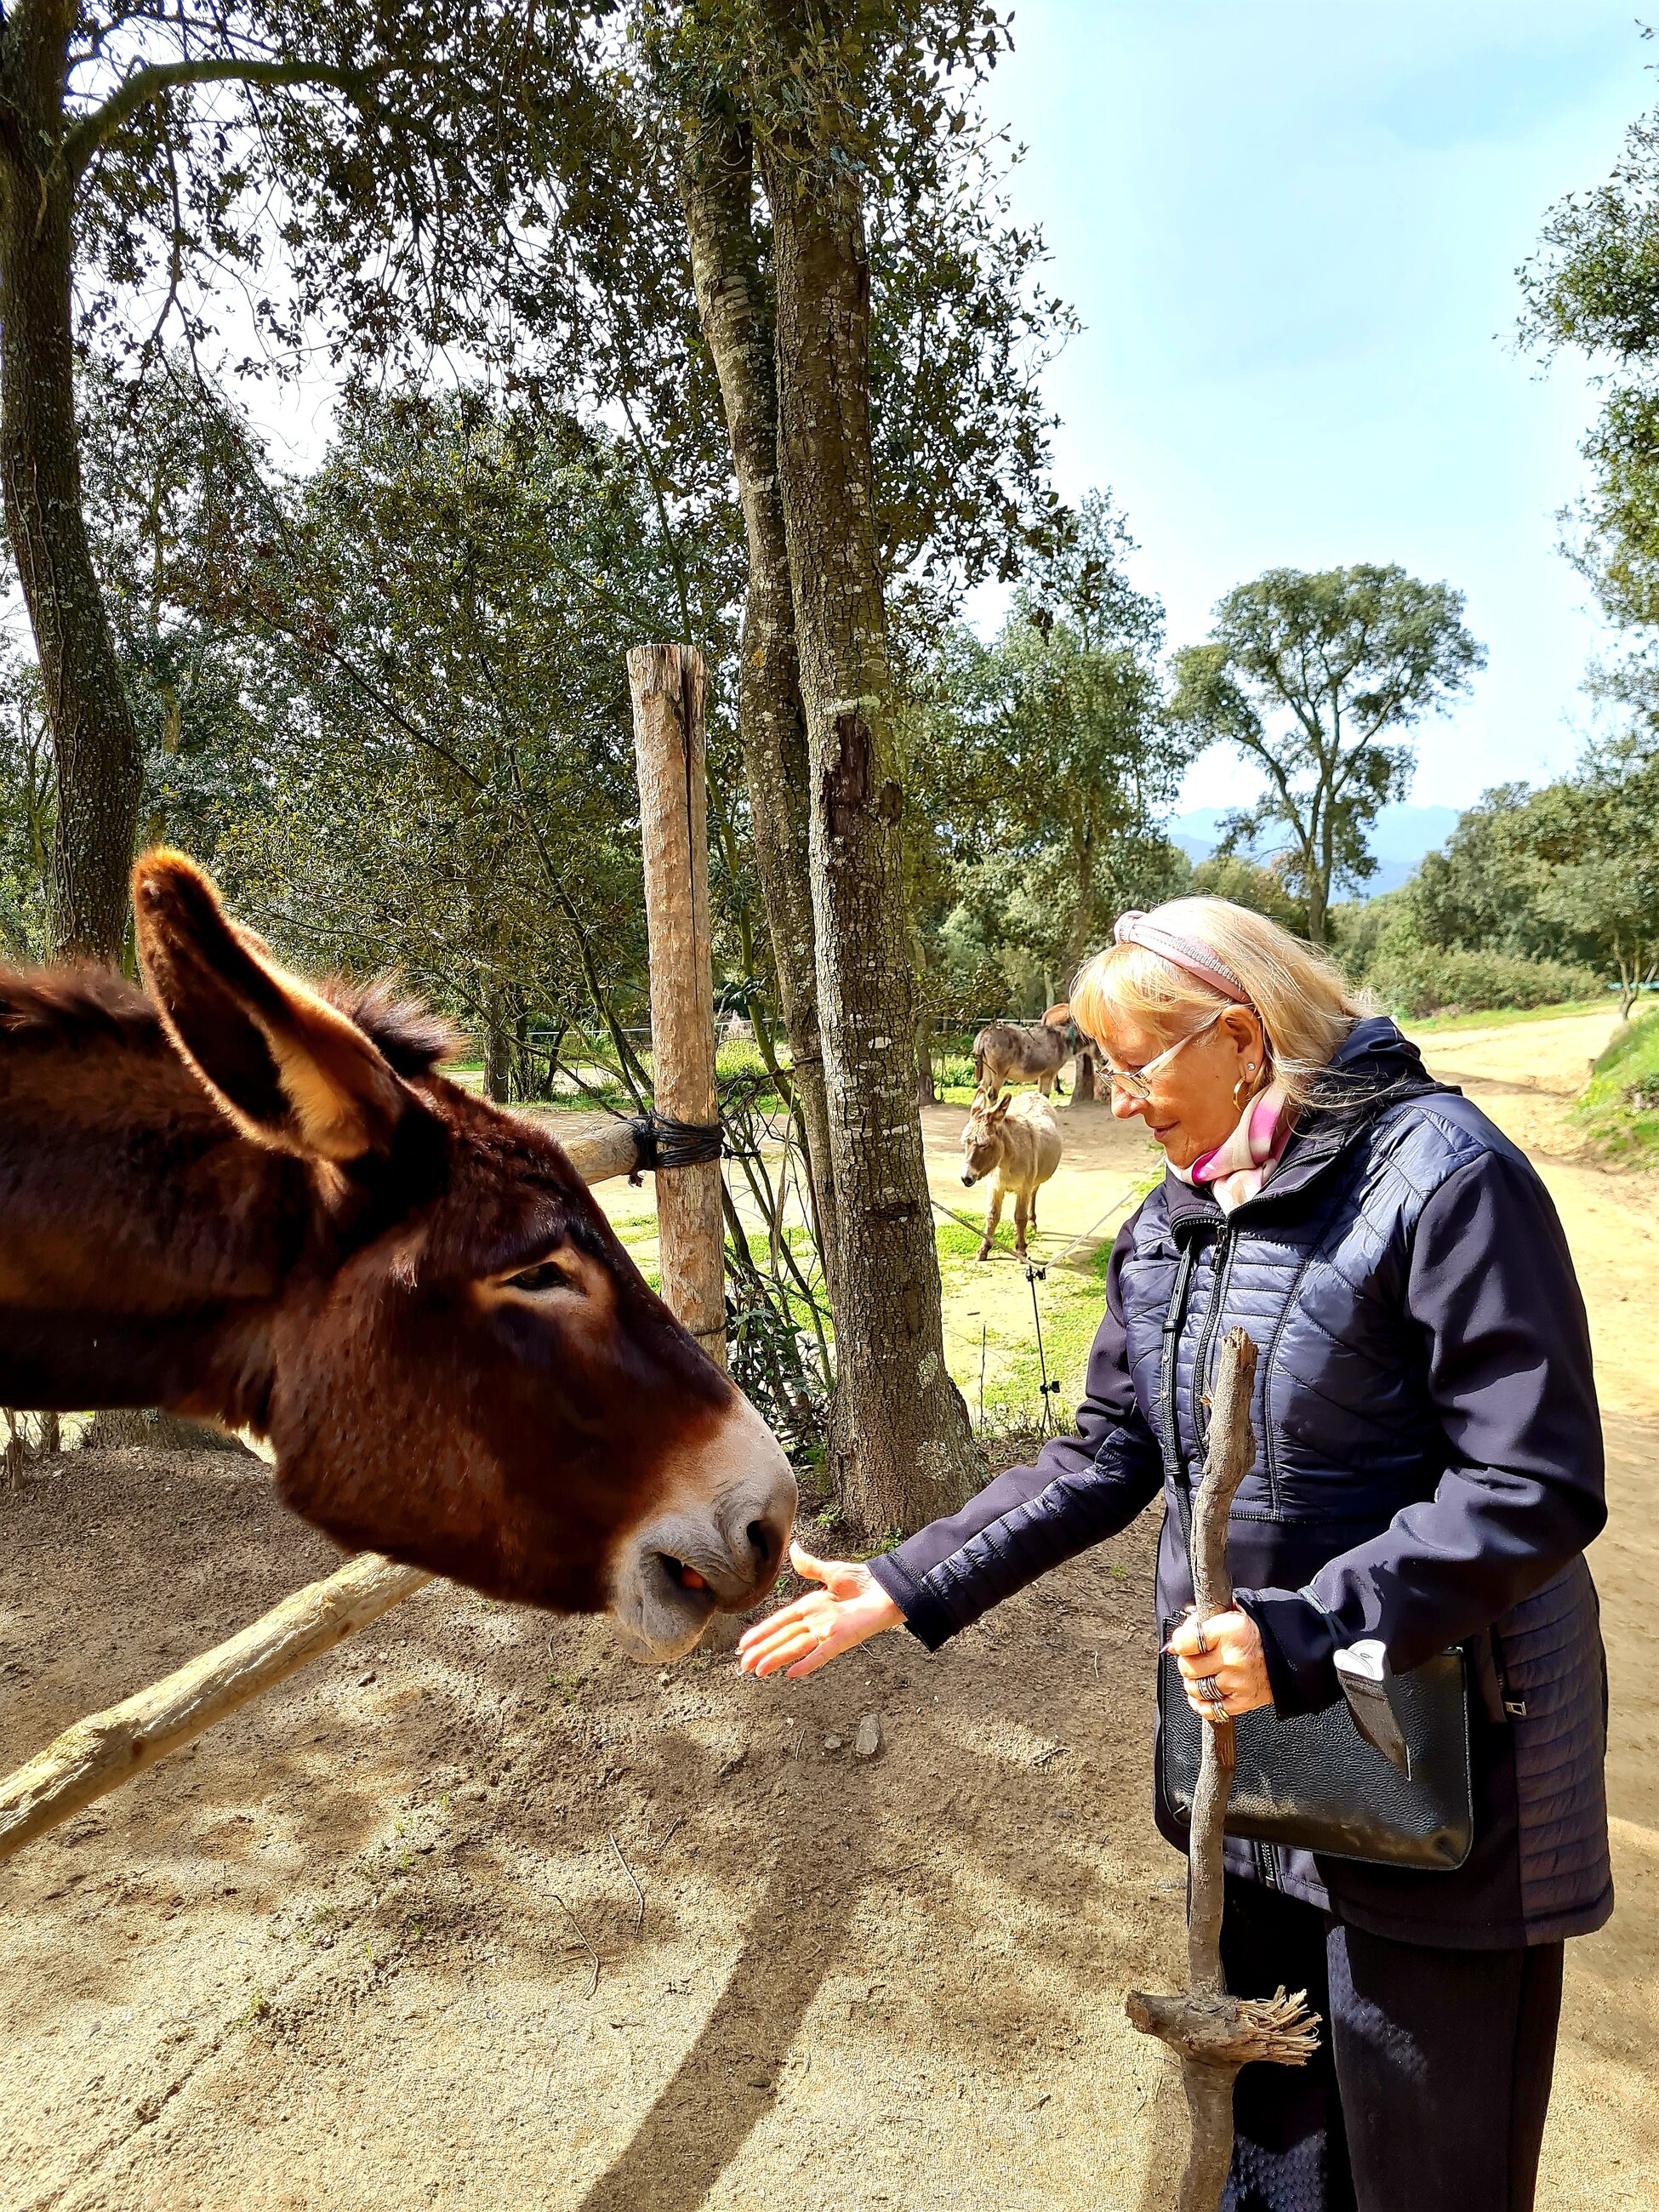 Feeding a donkey at Rukimon, a donkey reserve in the Montnege i Corredor Park